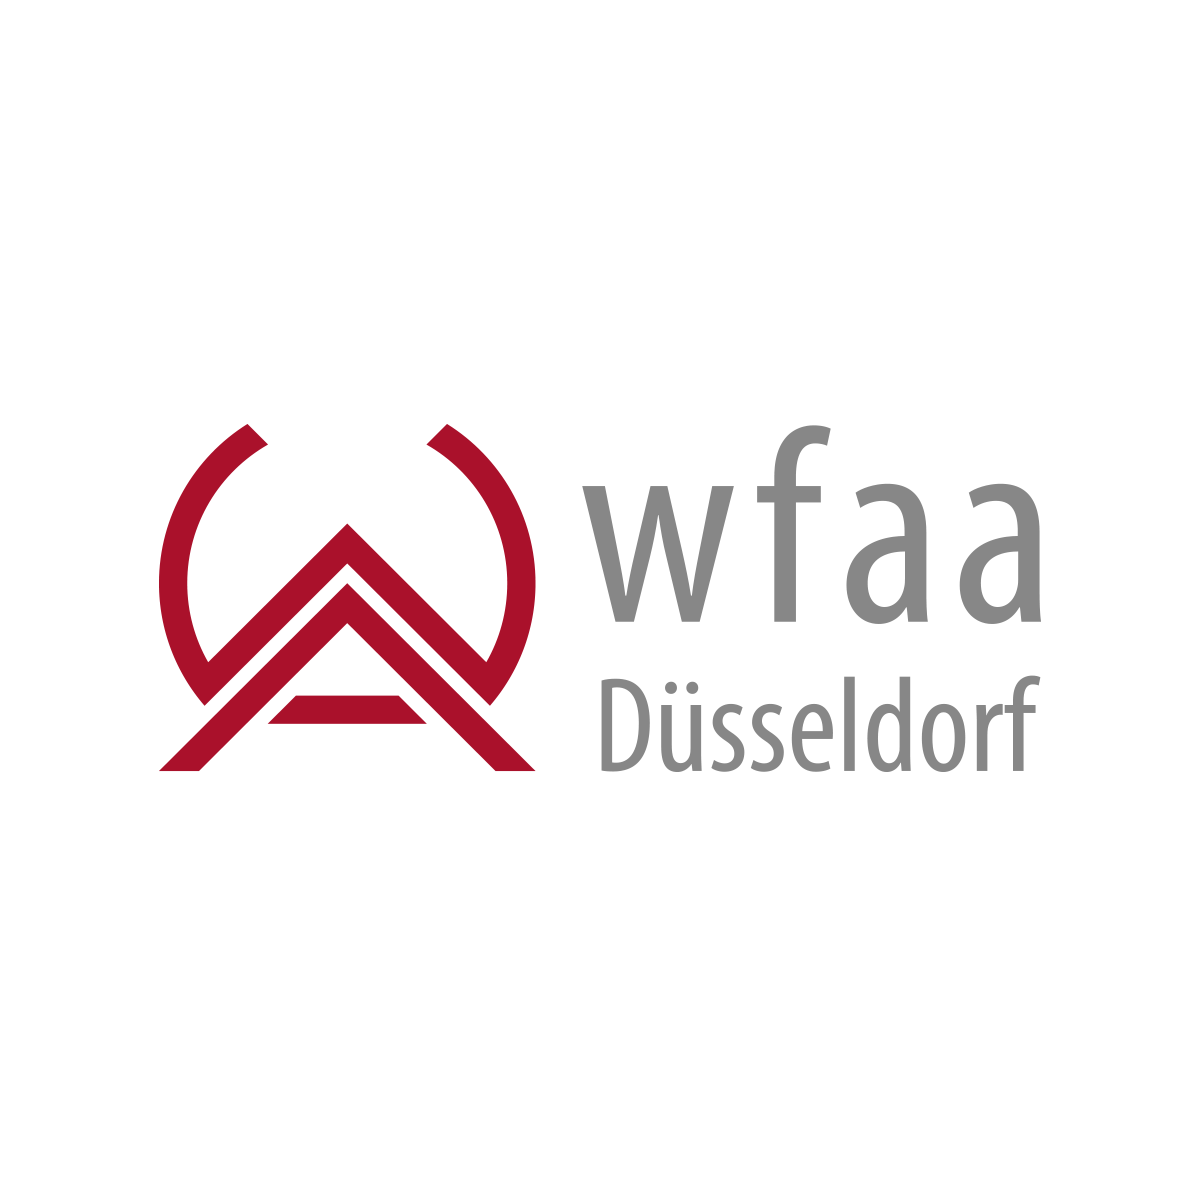 wfaa – Werkstatt für angepasste Arbeit